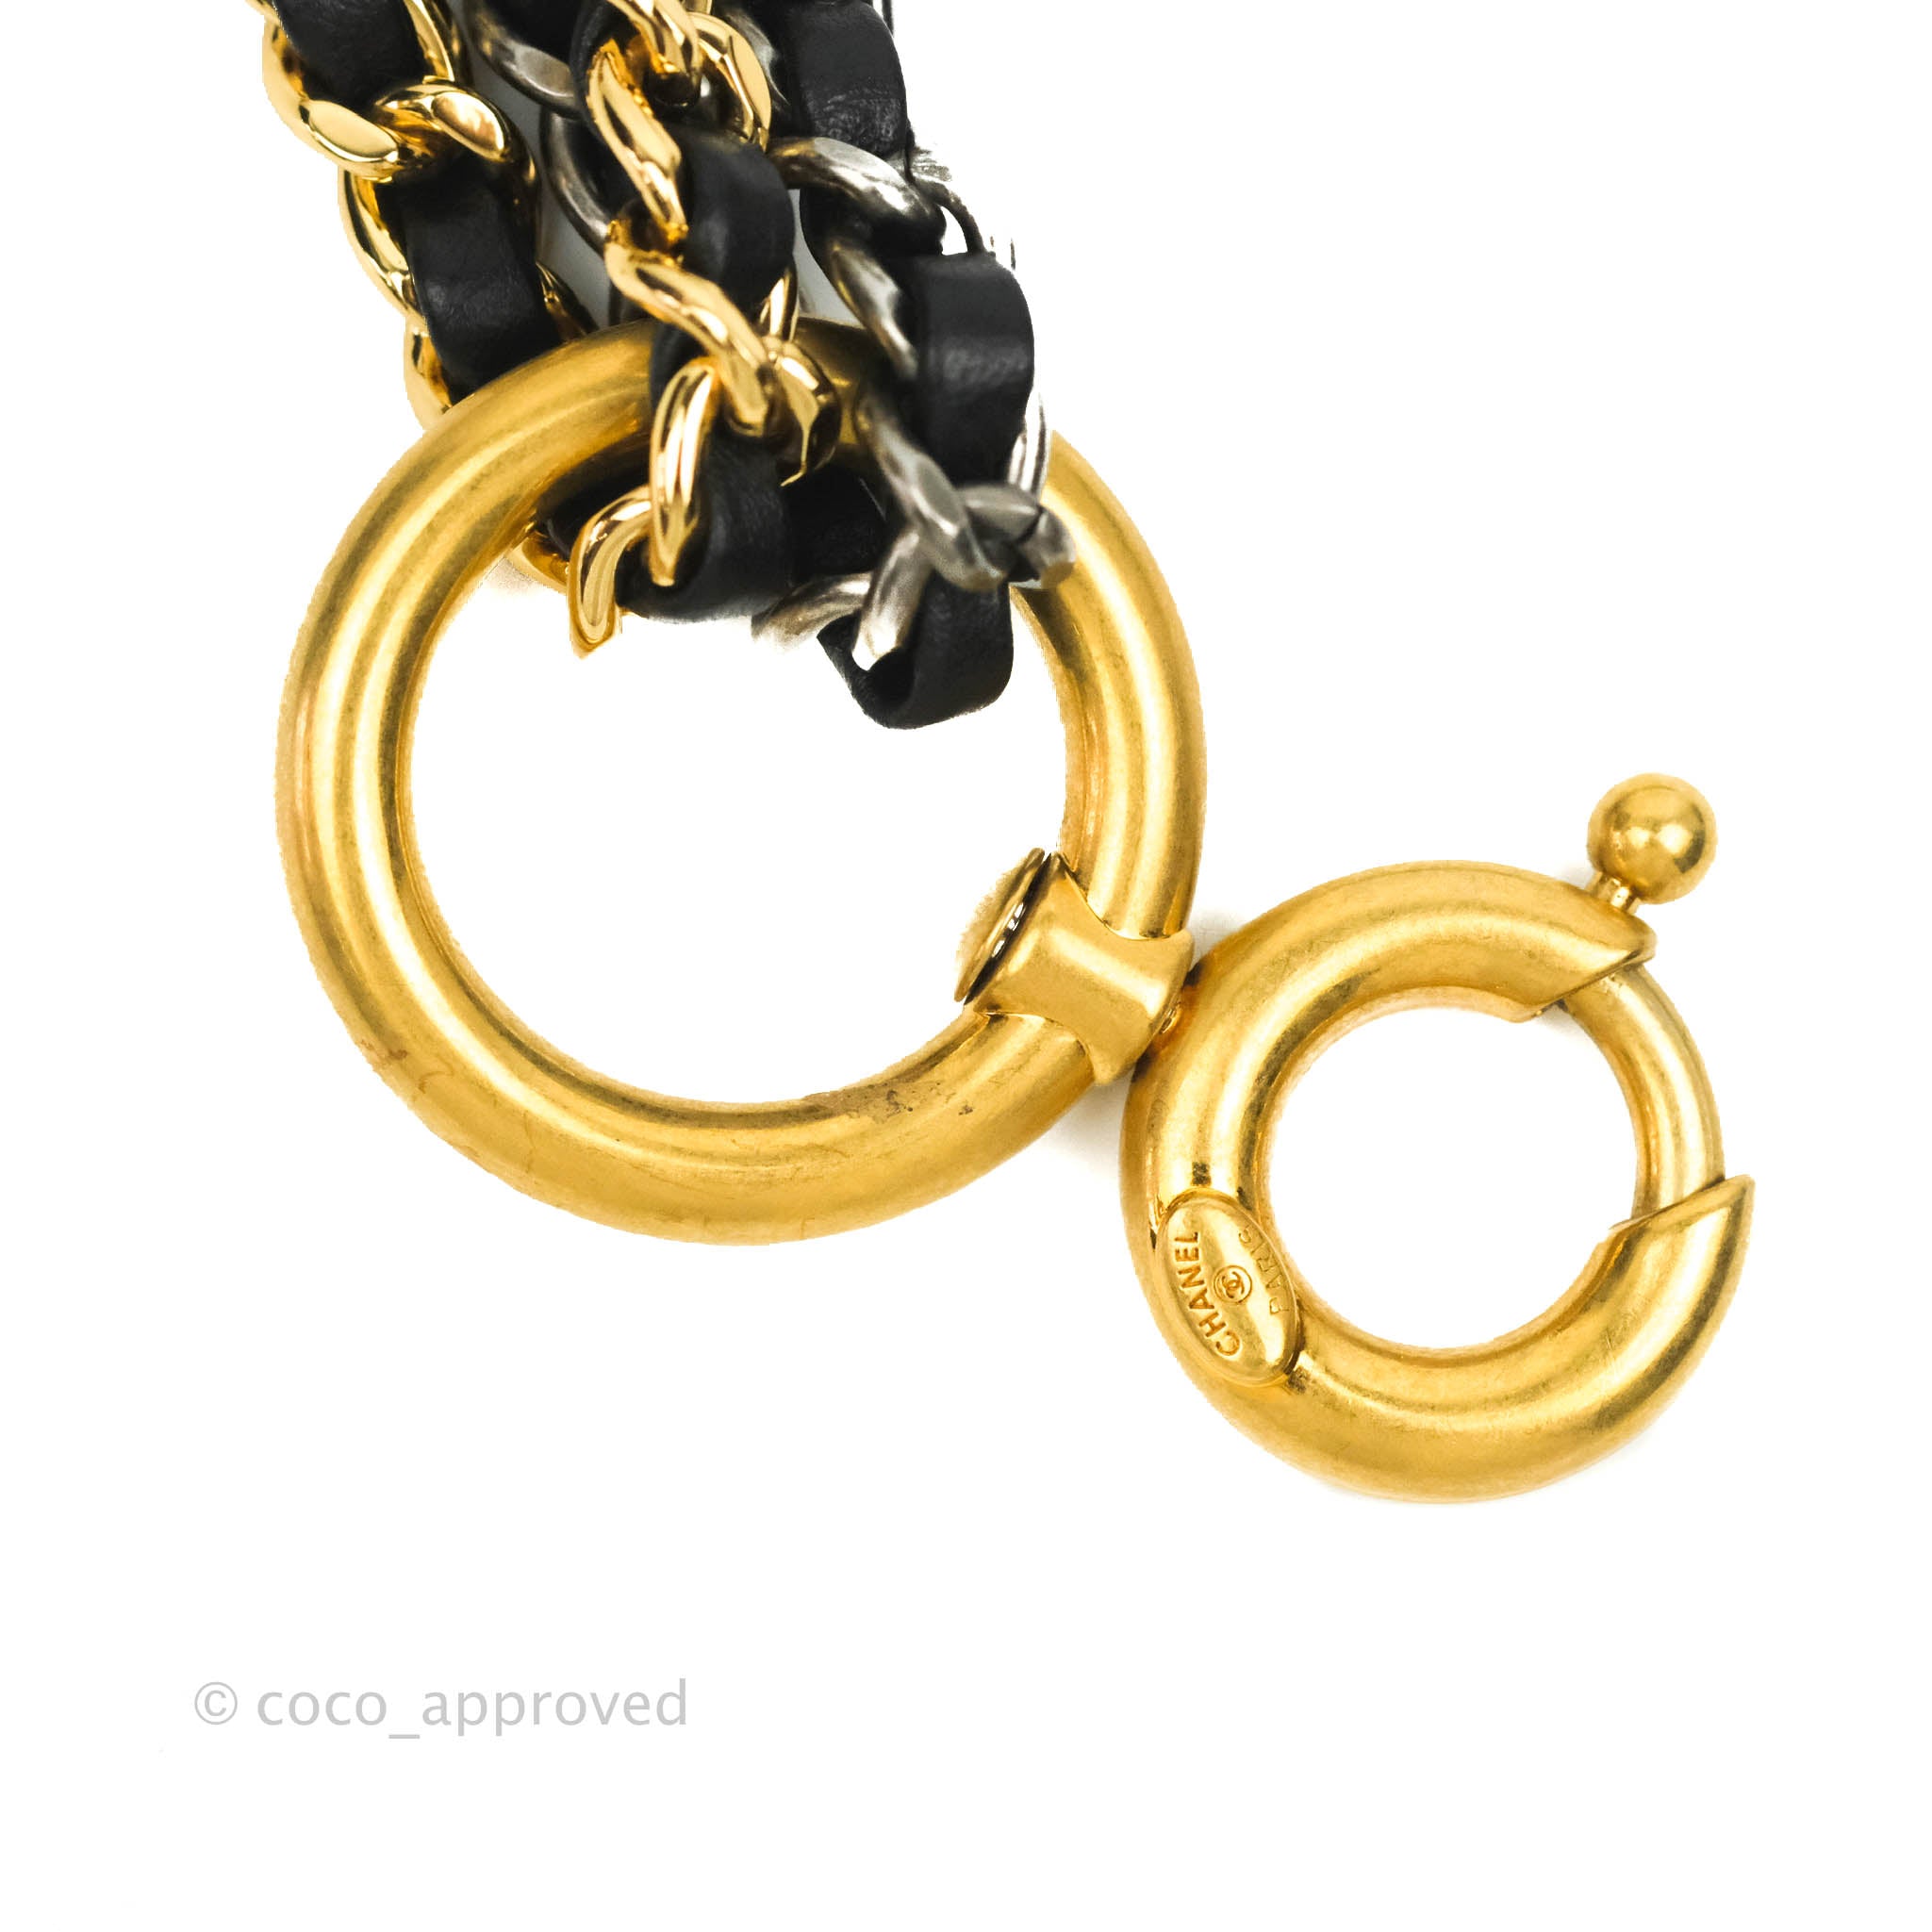 Worstnan_brandname - New Chanel Gabrielle Croc Gold Small Holo28 Full Set  15xxxx jaa หายาก ใน 18 โลก#chanelgabriellethailand #chanelgabriellebag